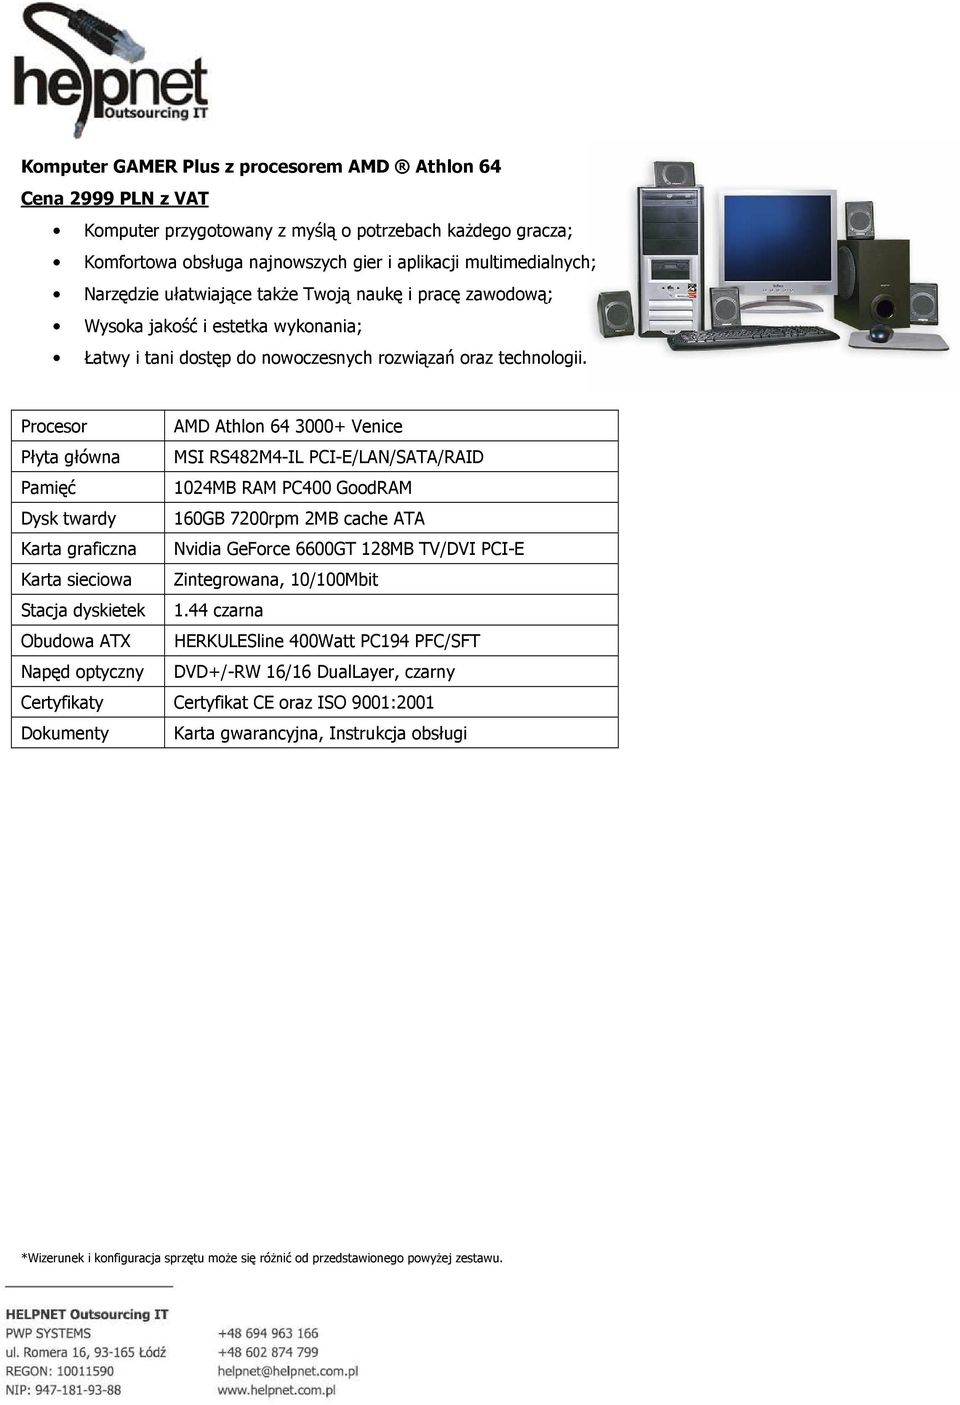 Procesor AMD Athlon 64 3000+ Venice Płyta główna MSI RS482M4-IL PCI-E/LAN/SATA/RAID Pamięć 1024MB RAM PC400 GoodRAM Dysk twardy 160GB 7200rpm 2MB cache ATA Karta graficzna